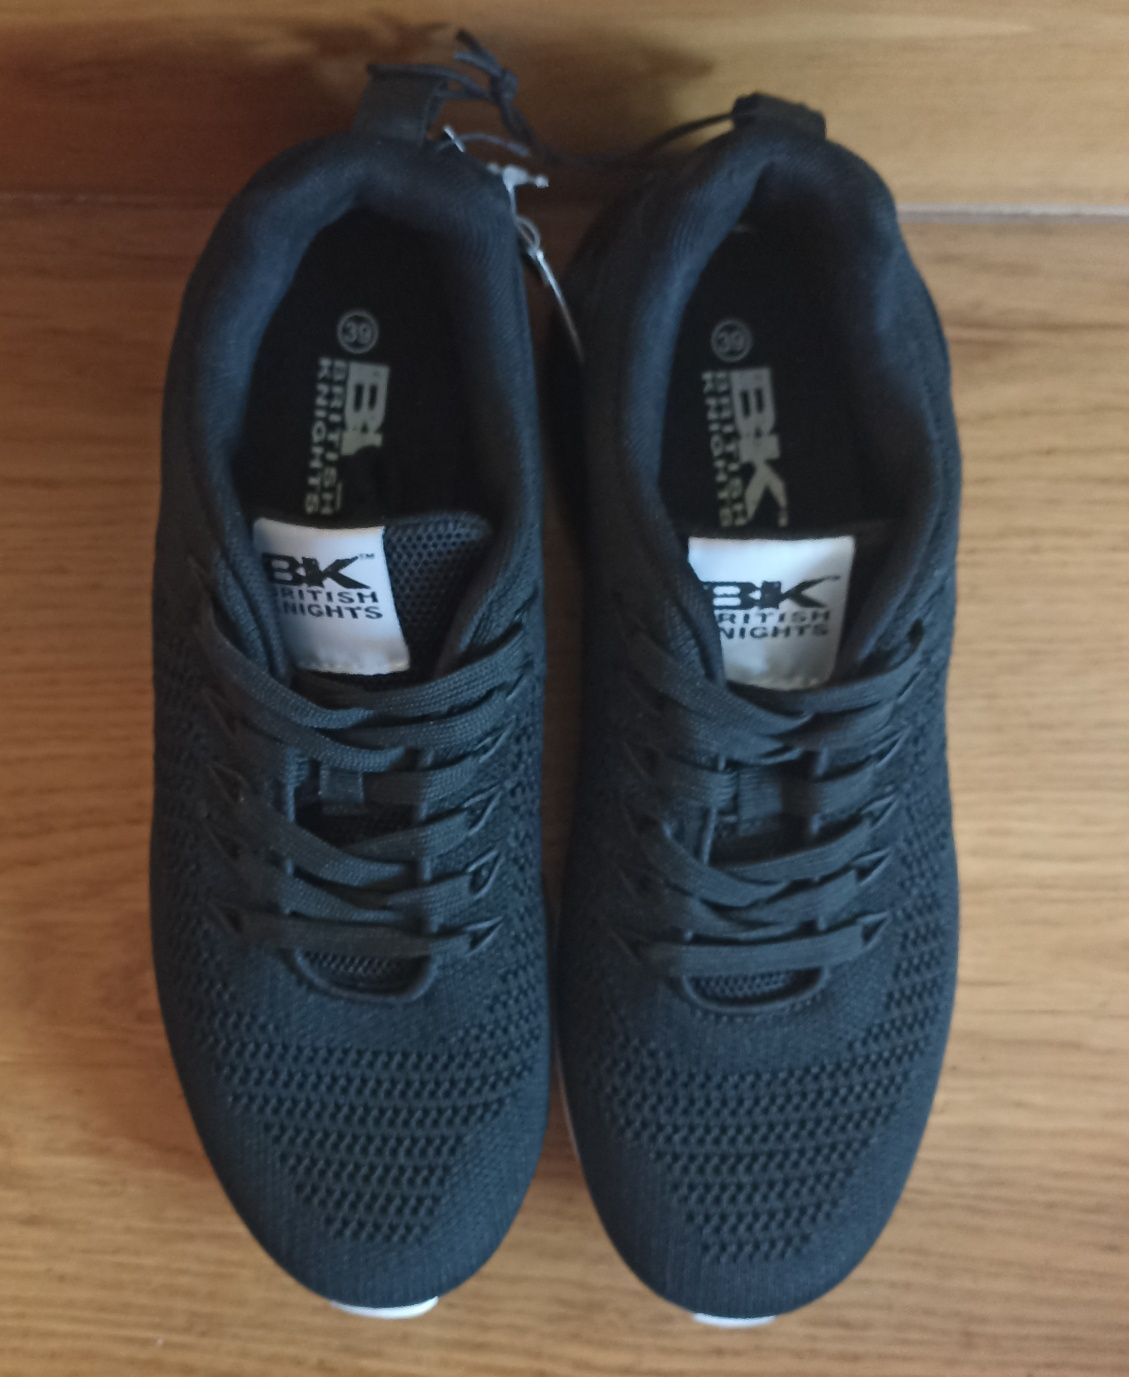 Buty sportowe adidasy sneakersy BK 39 czarne - nowe